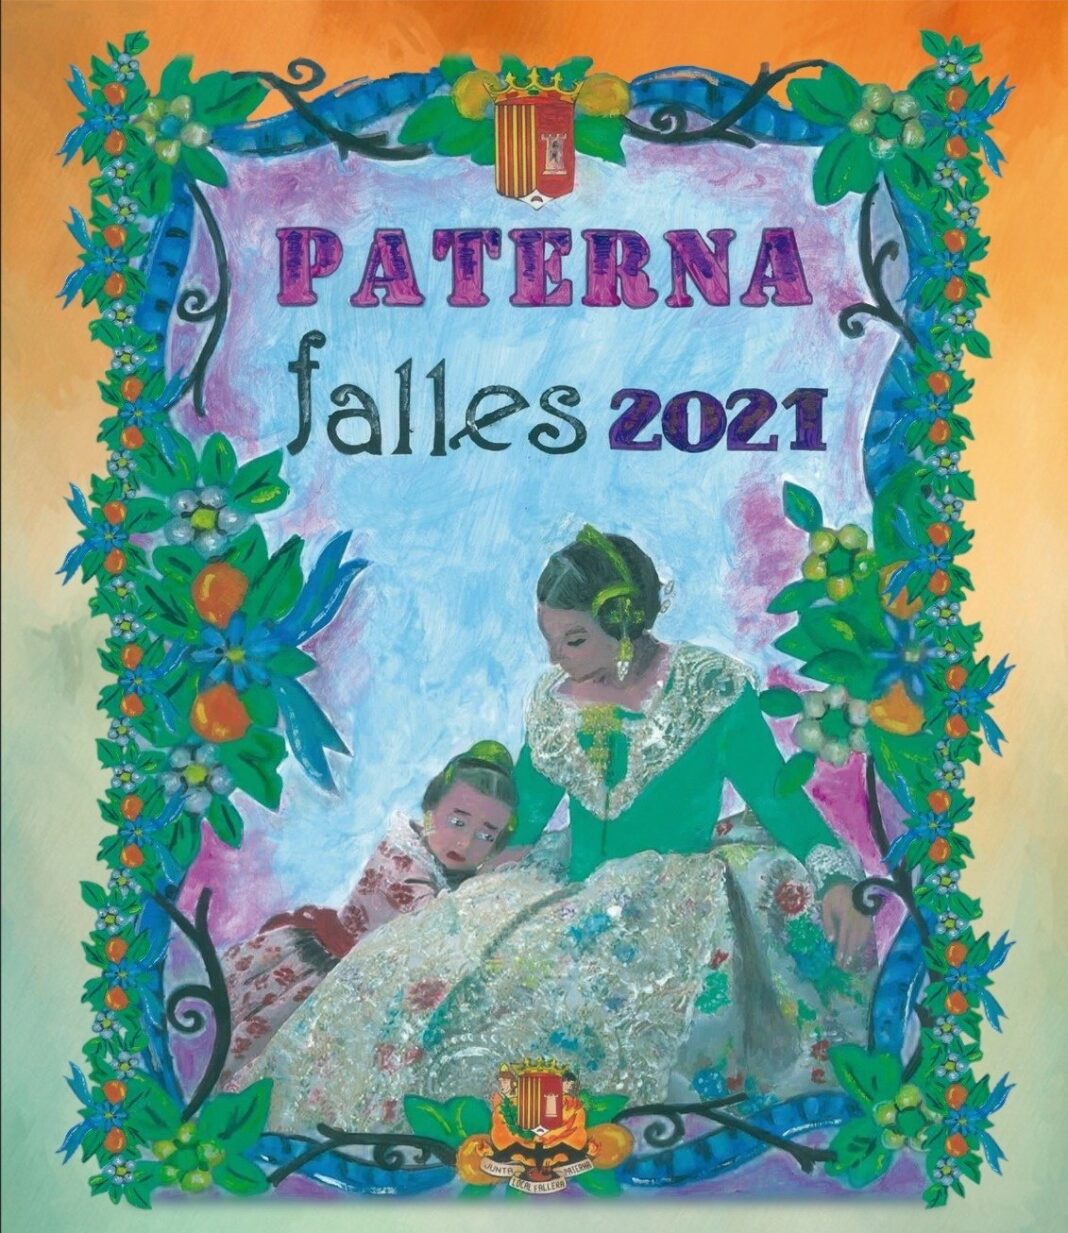 Paterna celebra esta semana sus Fallas 2021